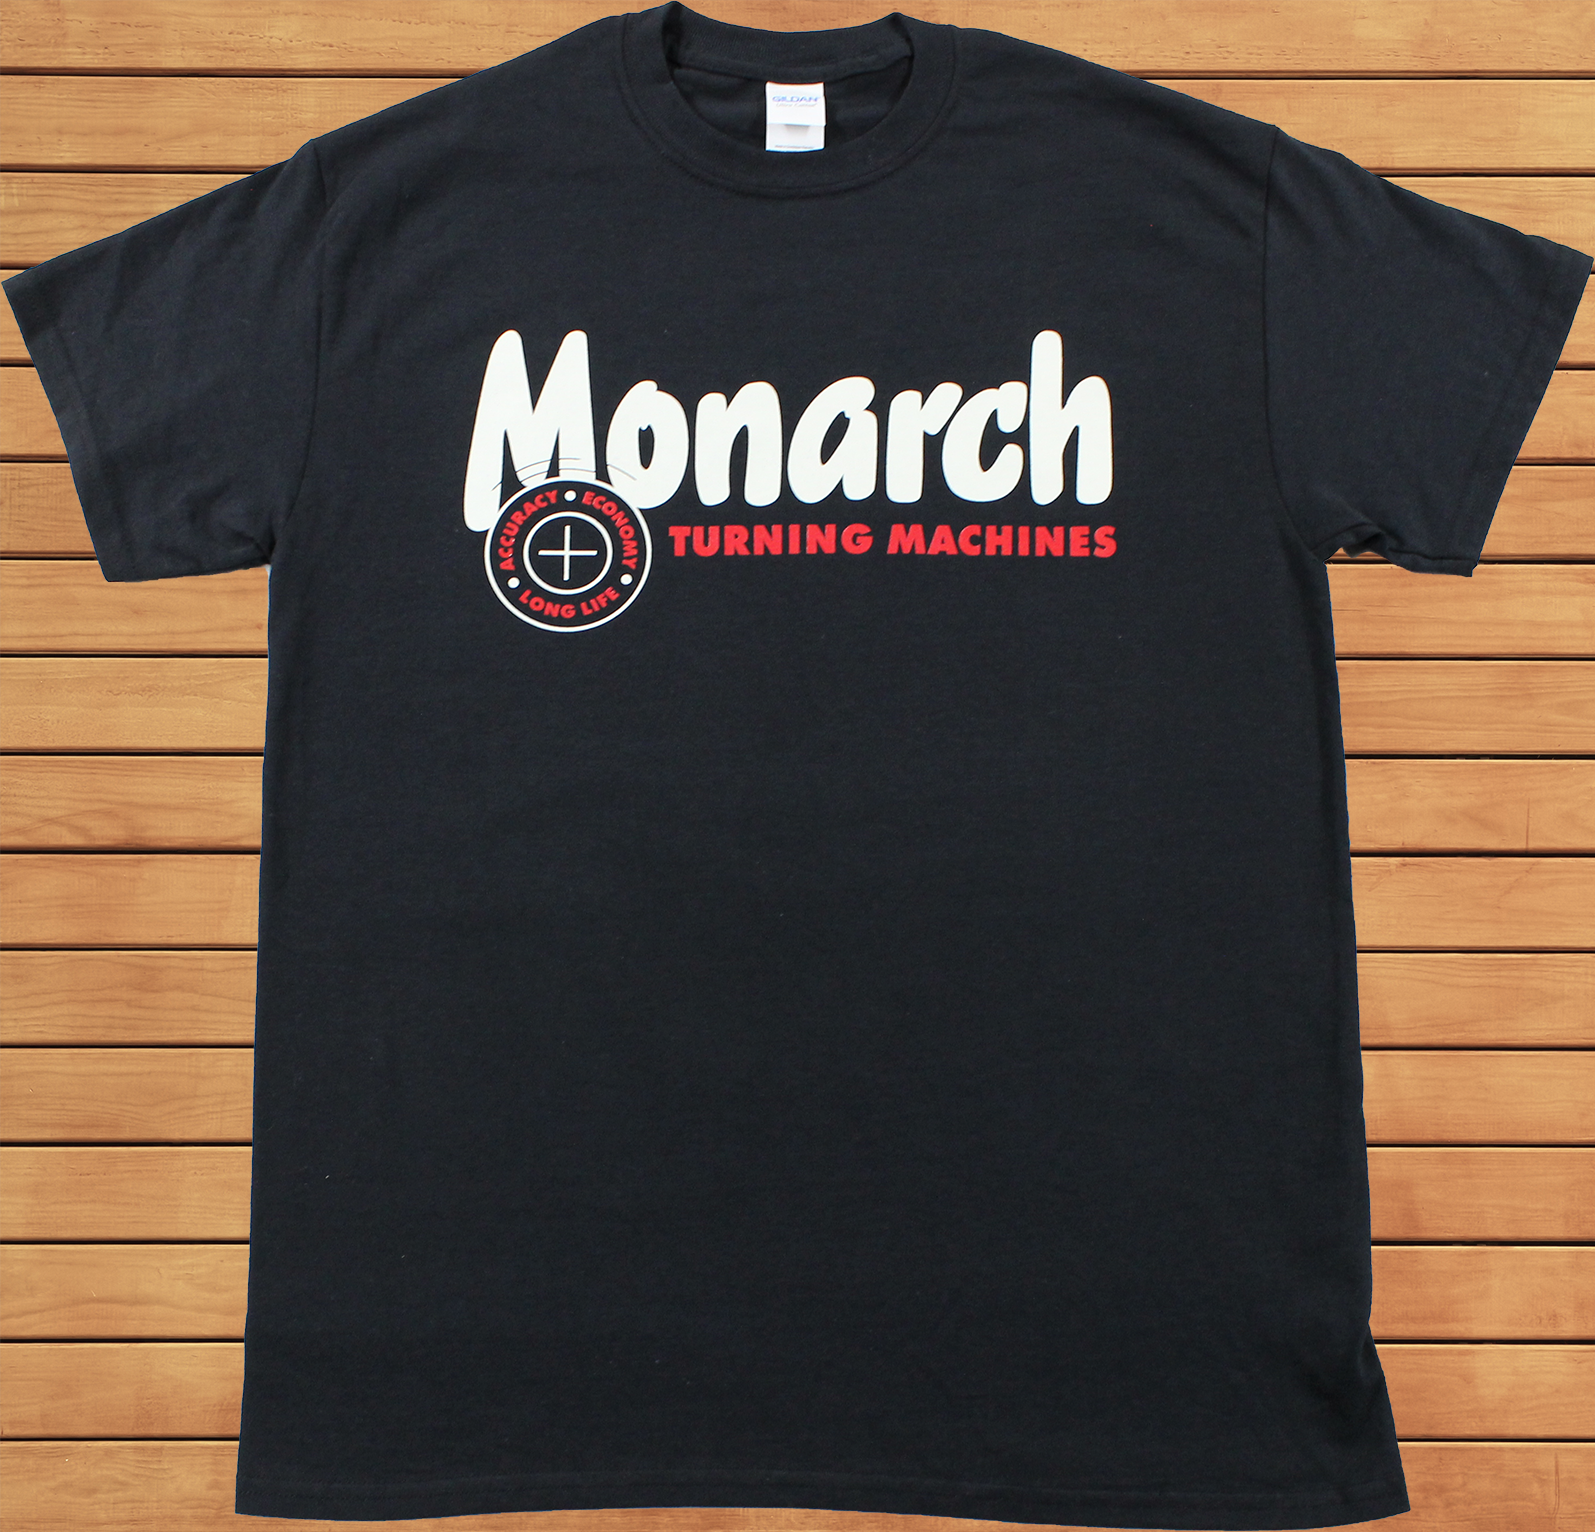 Monarch Lathe T-Shirt (Rare Vintage Machine tool logo) Gildan Black